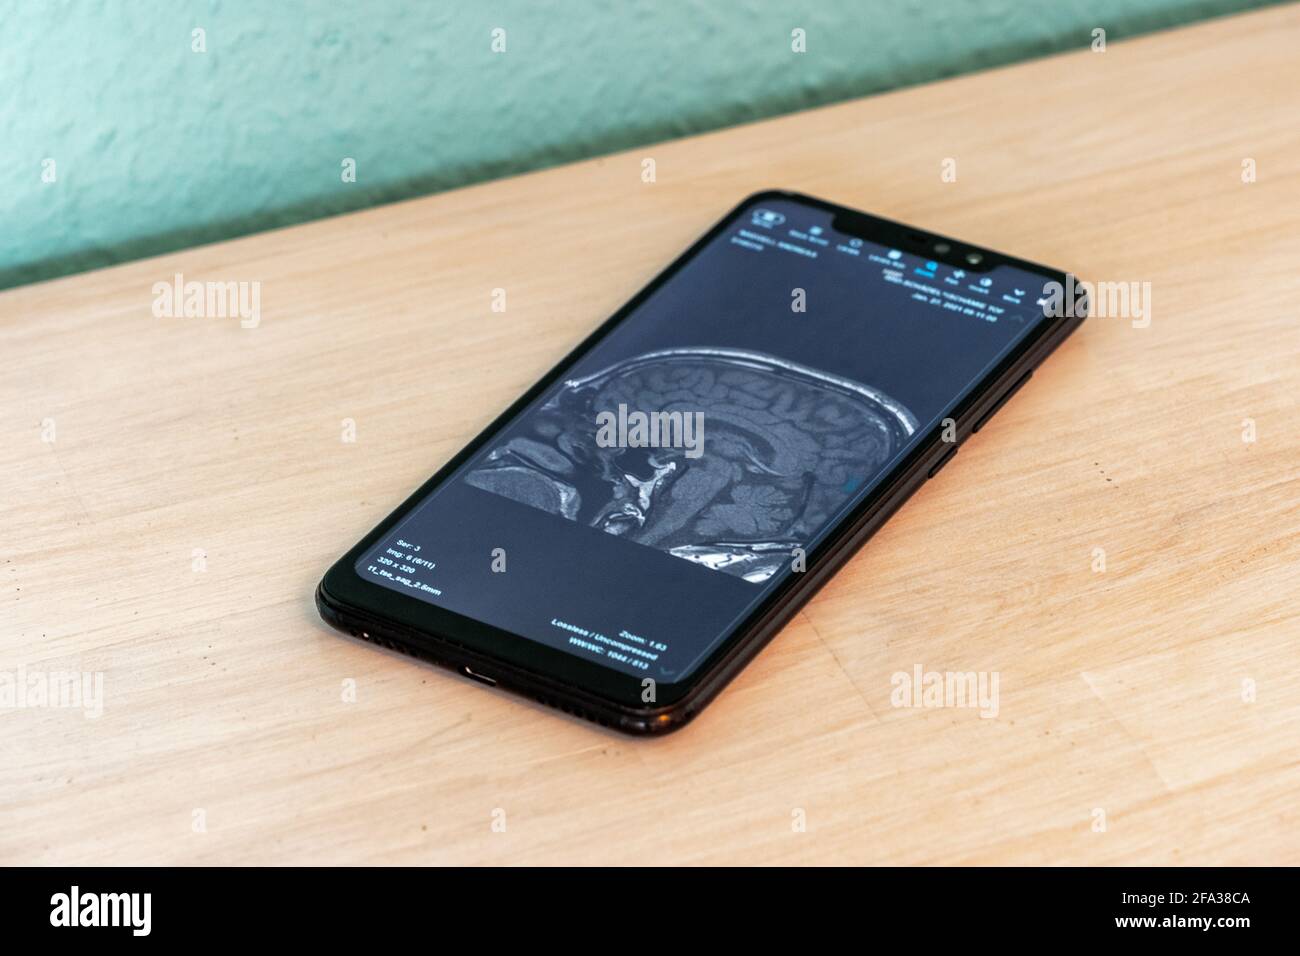 MRI Image of a Human Brain shown on a Smartphone Screen Stock Photo